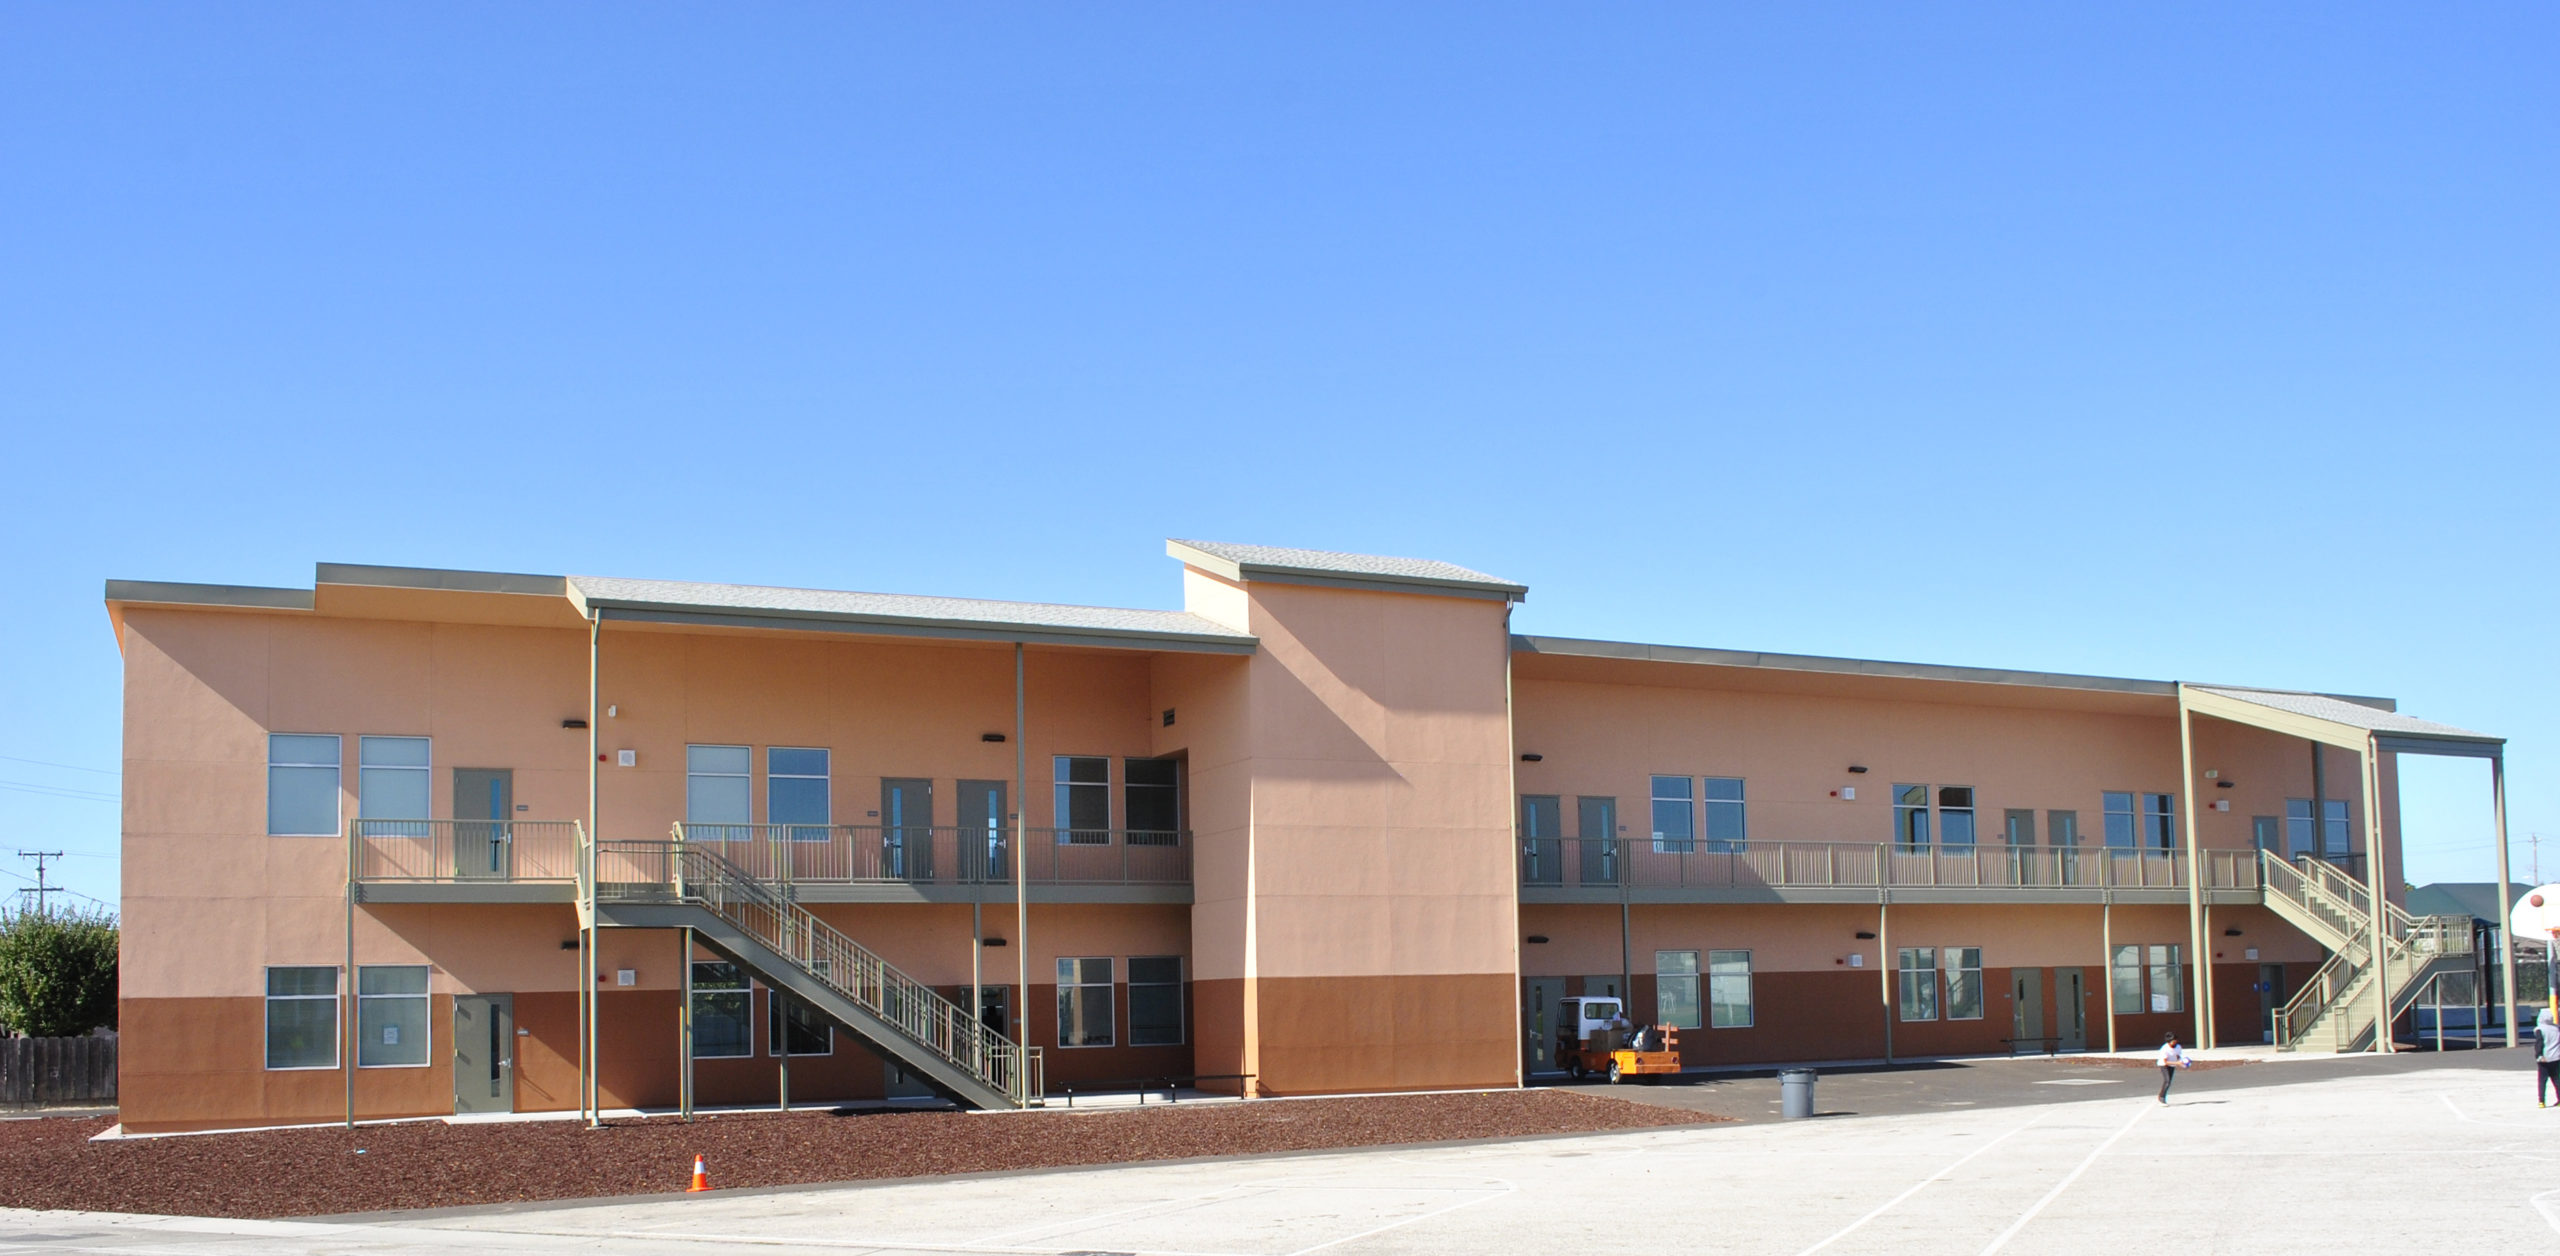 Fremont Elementary School 2-Story Modular Classroom Building Exterior